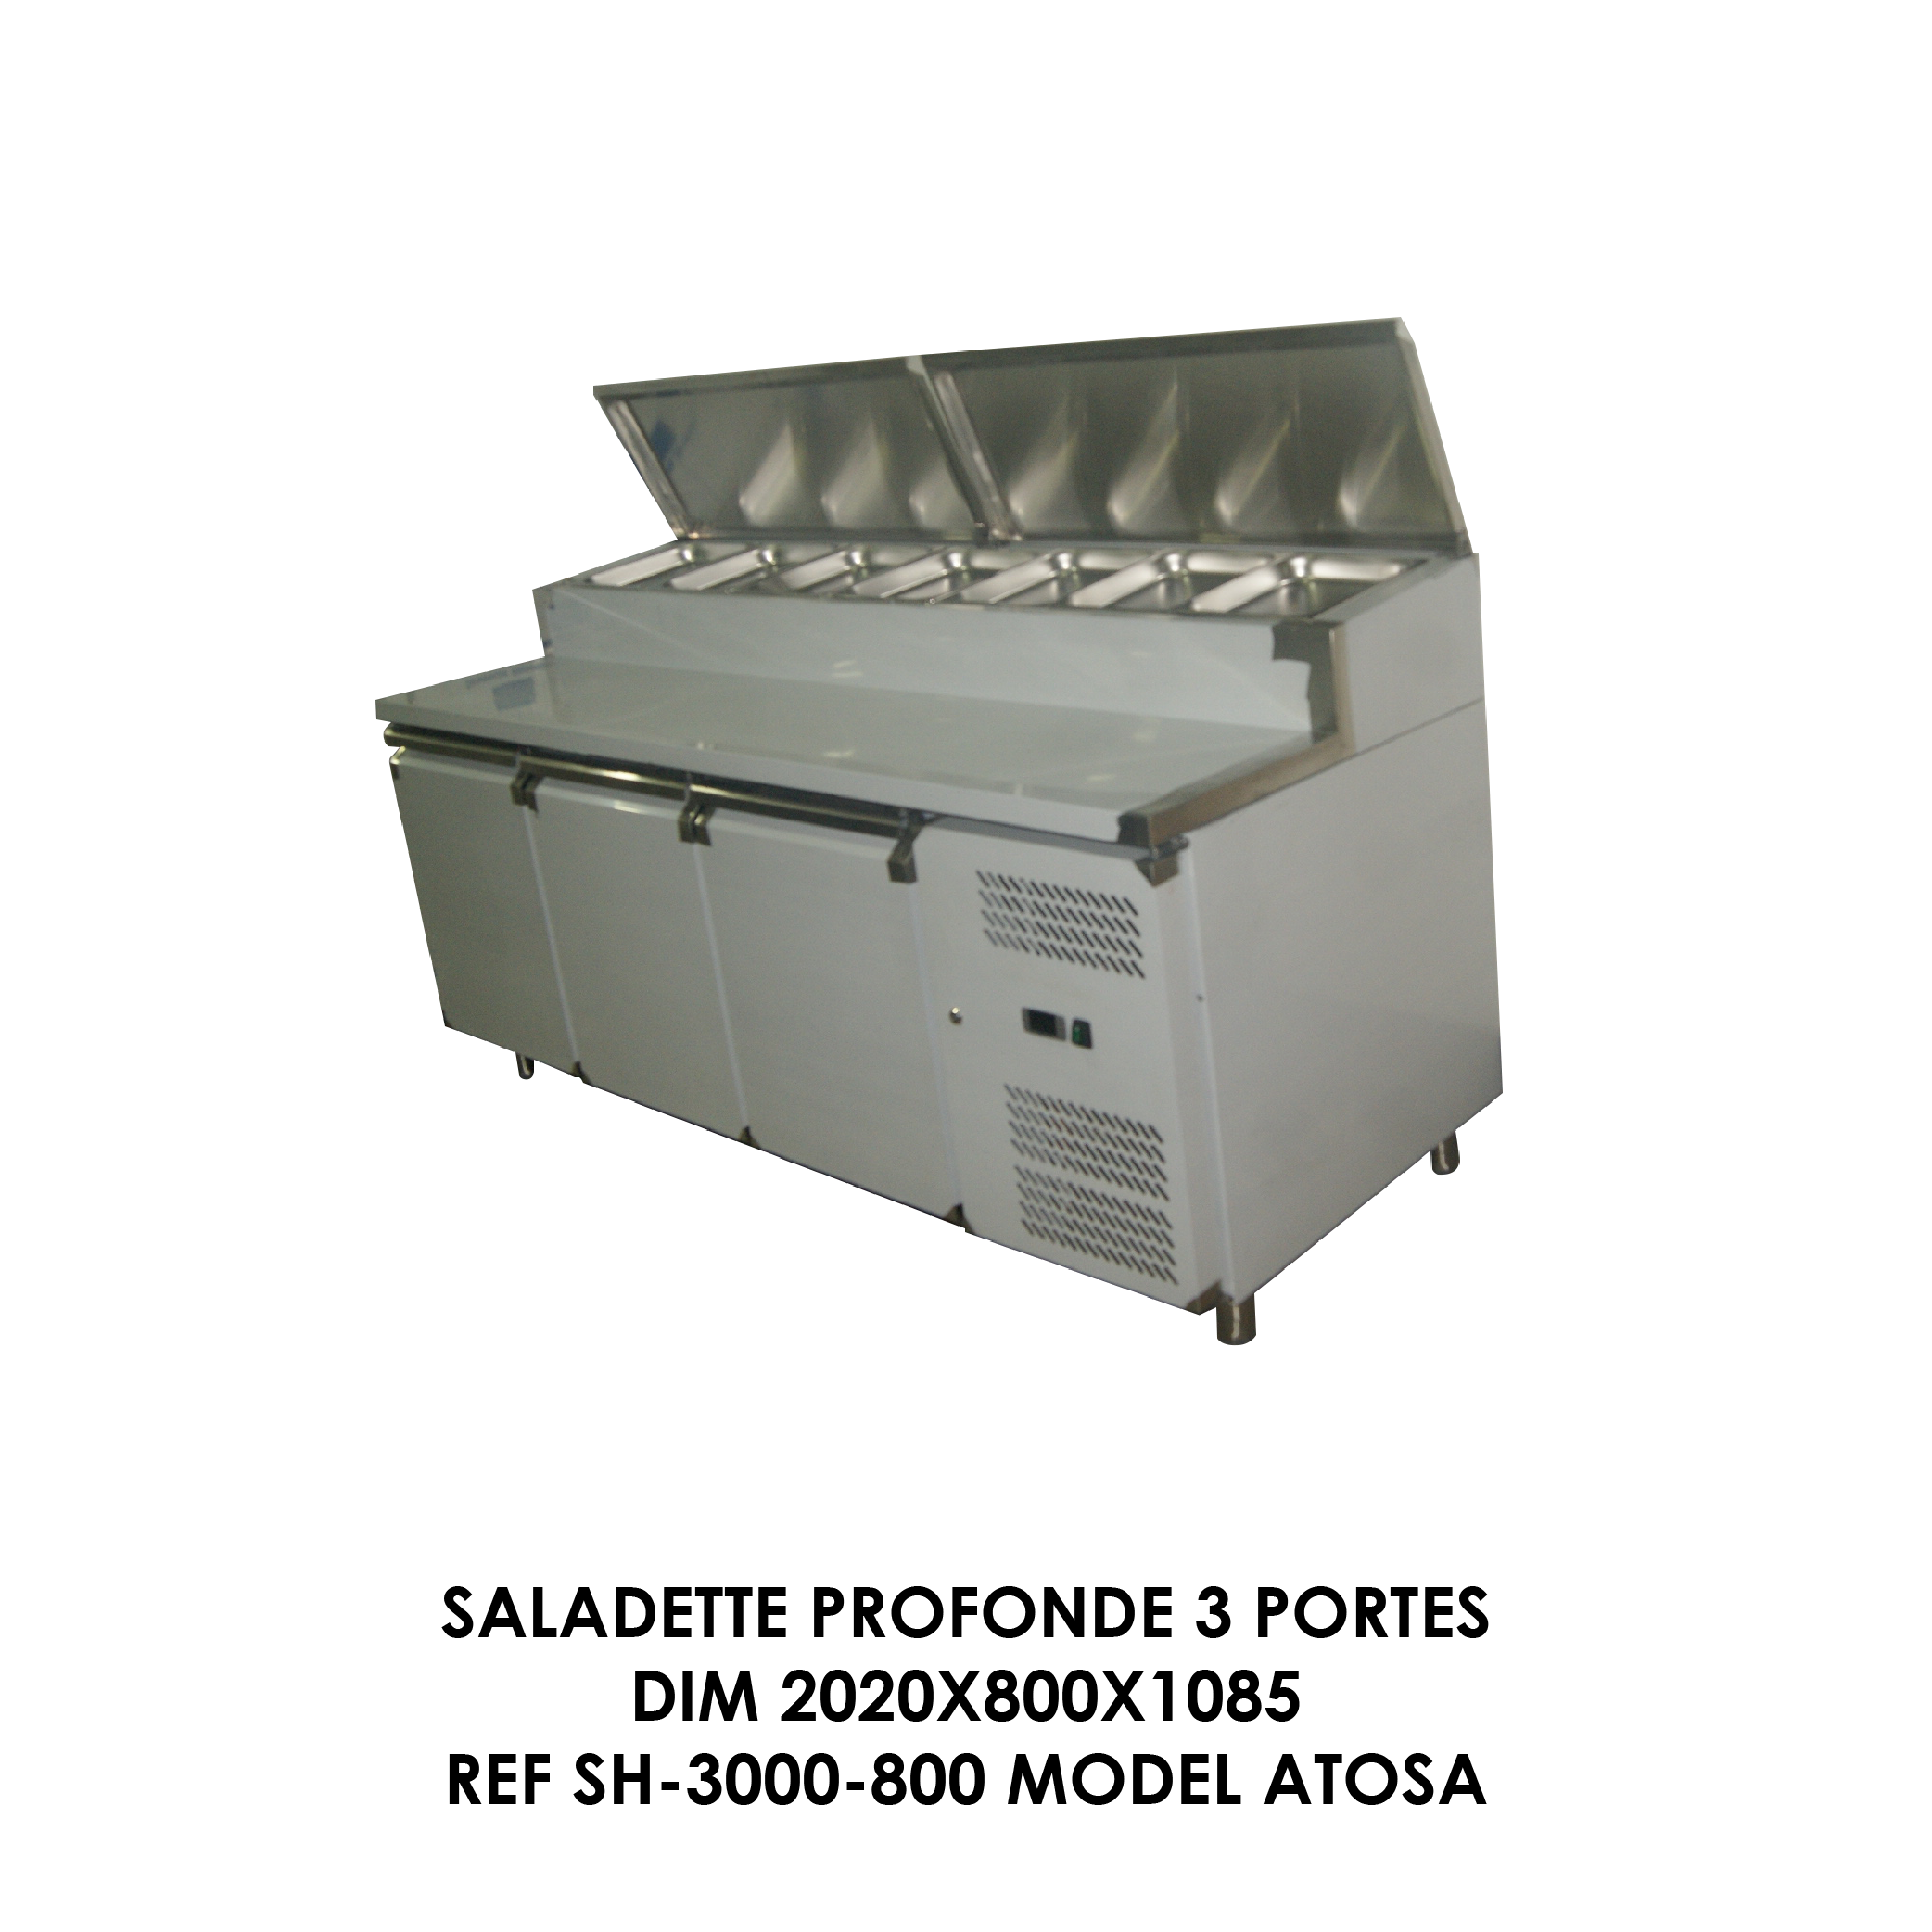 SALADETTE PROFONDE 3 PORTES DIM 2020X800X1085 REF SH-3000-800 MODEL ATOSA